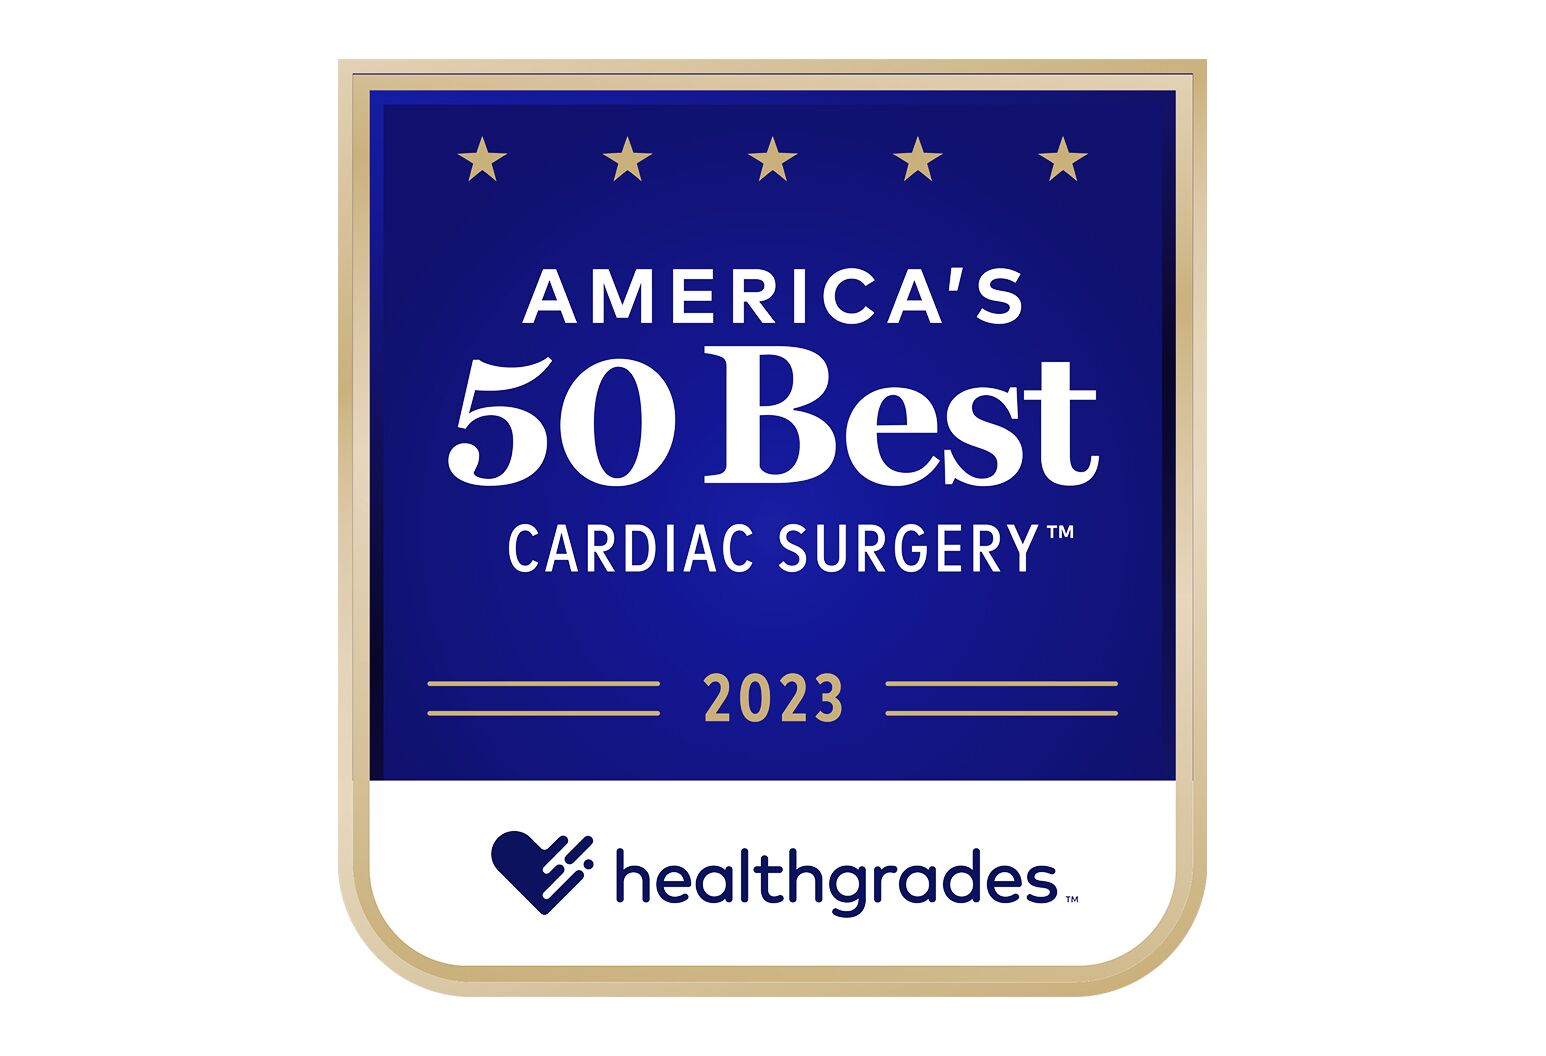 America's 50 Best Cardiac Surgery 2023 Healthgrades badge